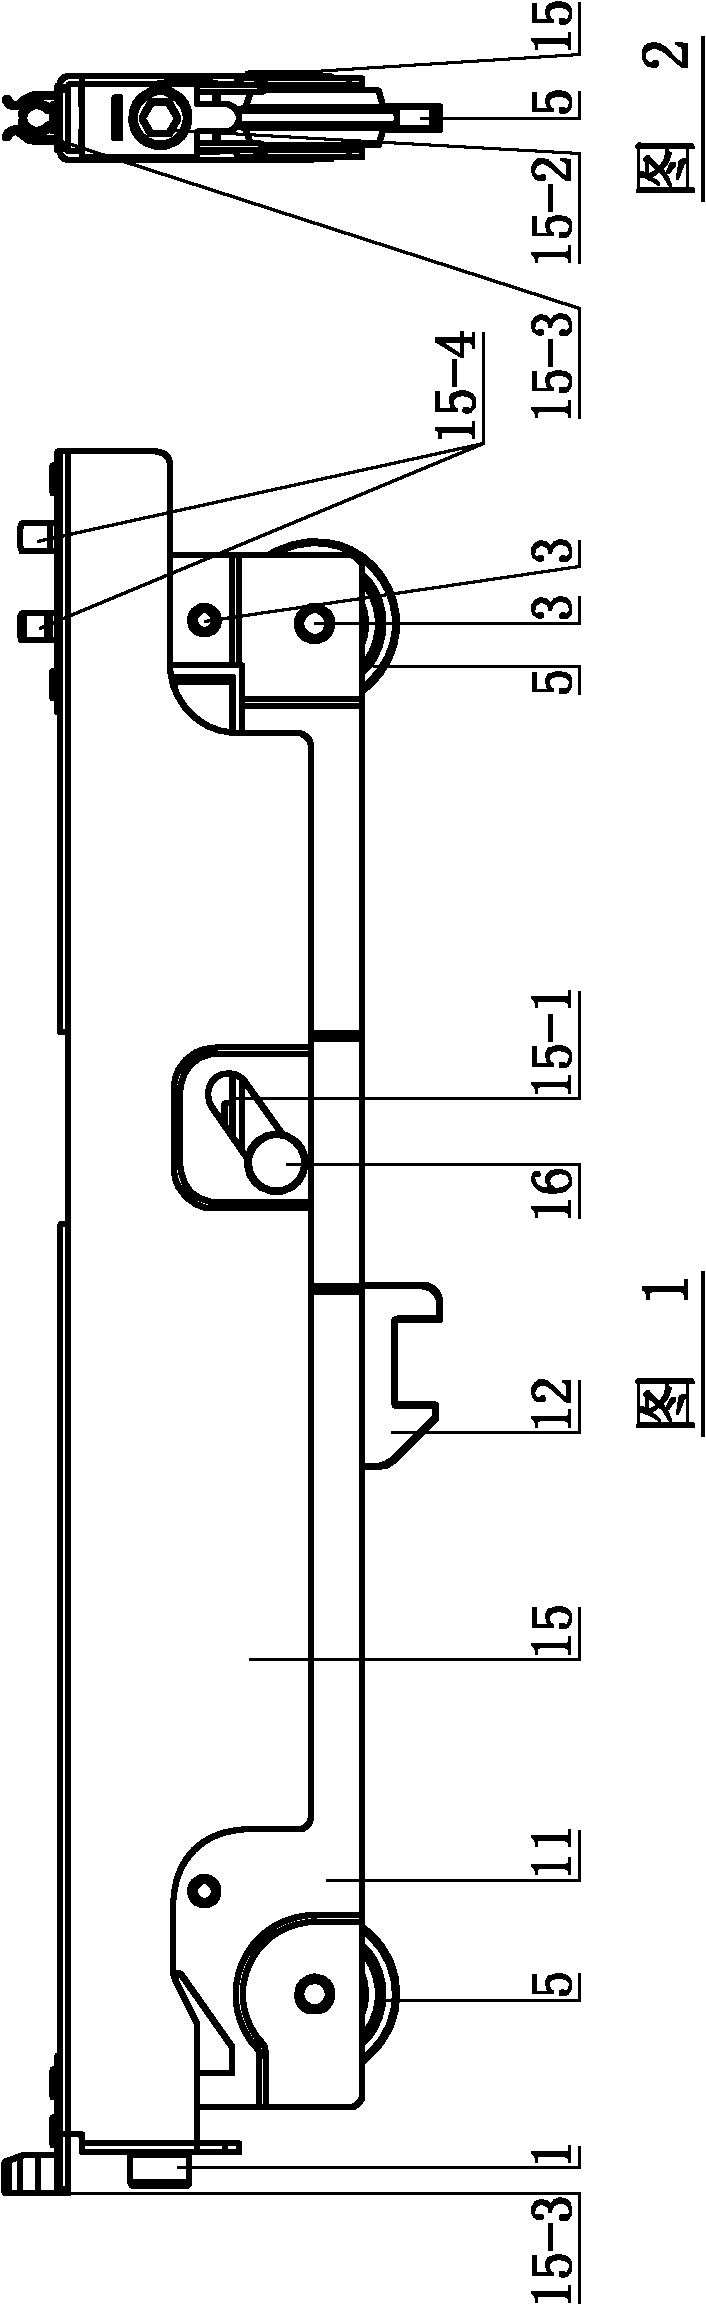 Damper-including sliding wheel assembly under wall cabinet door